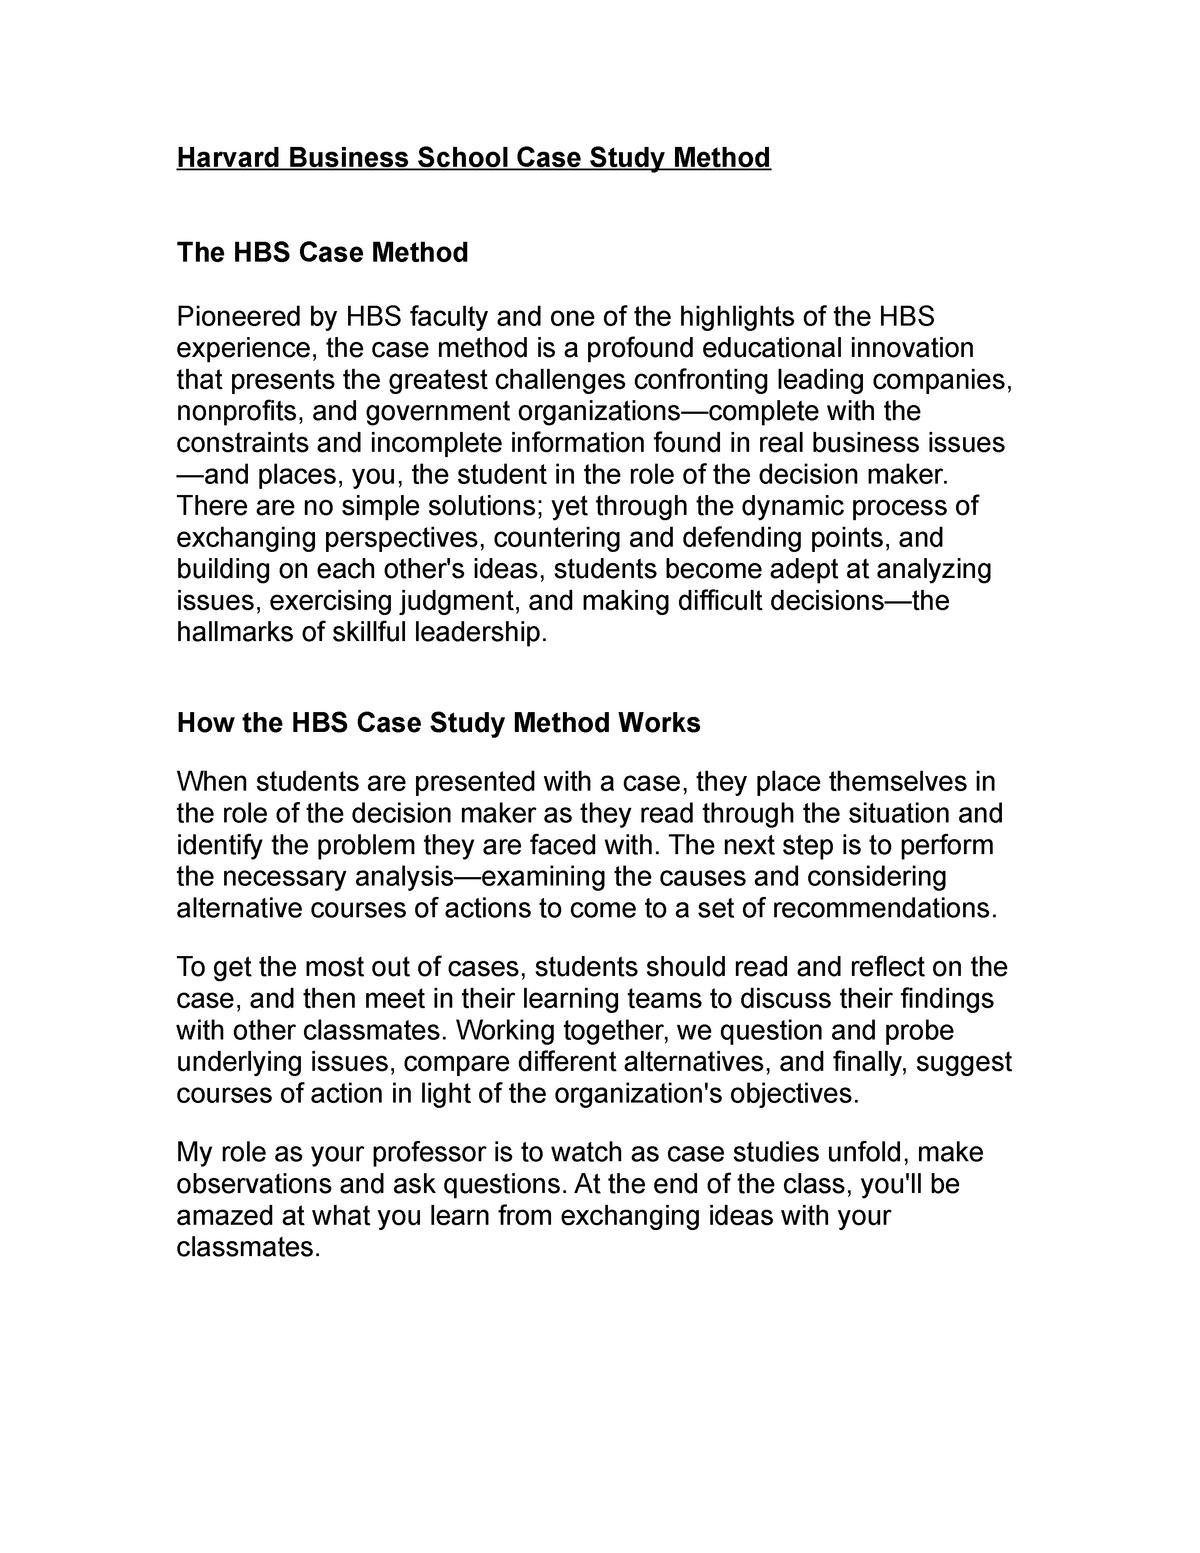 case study format harvard business school